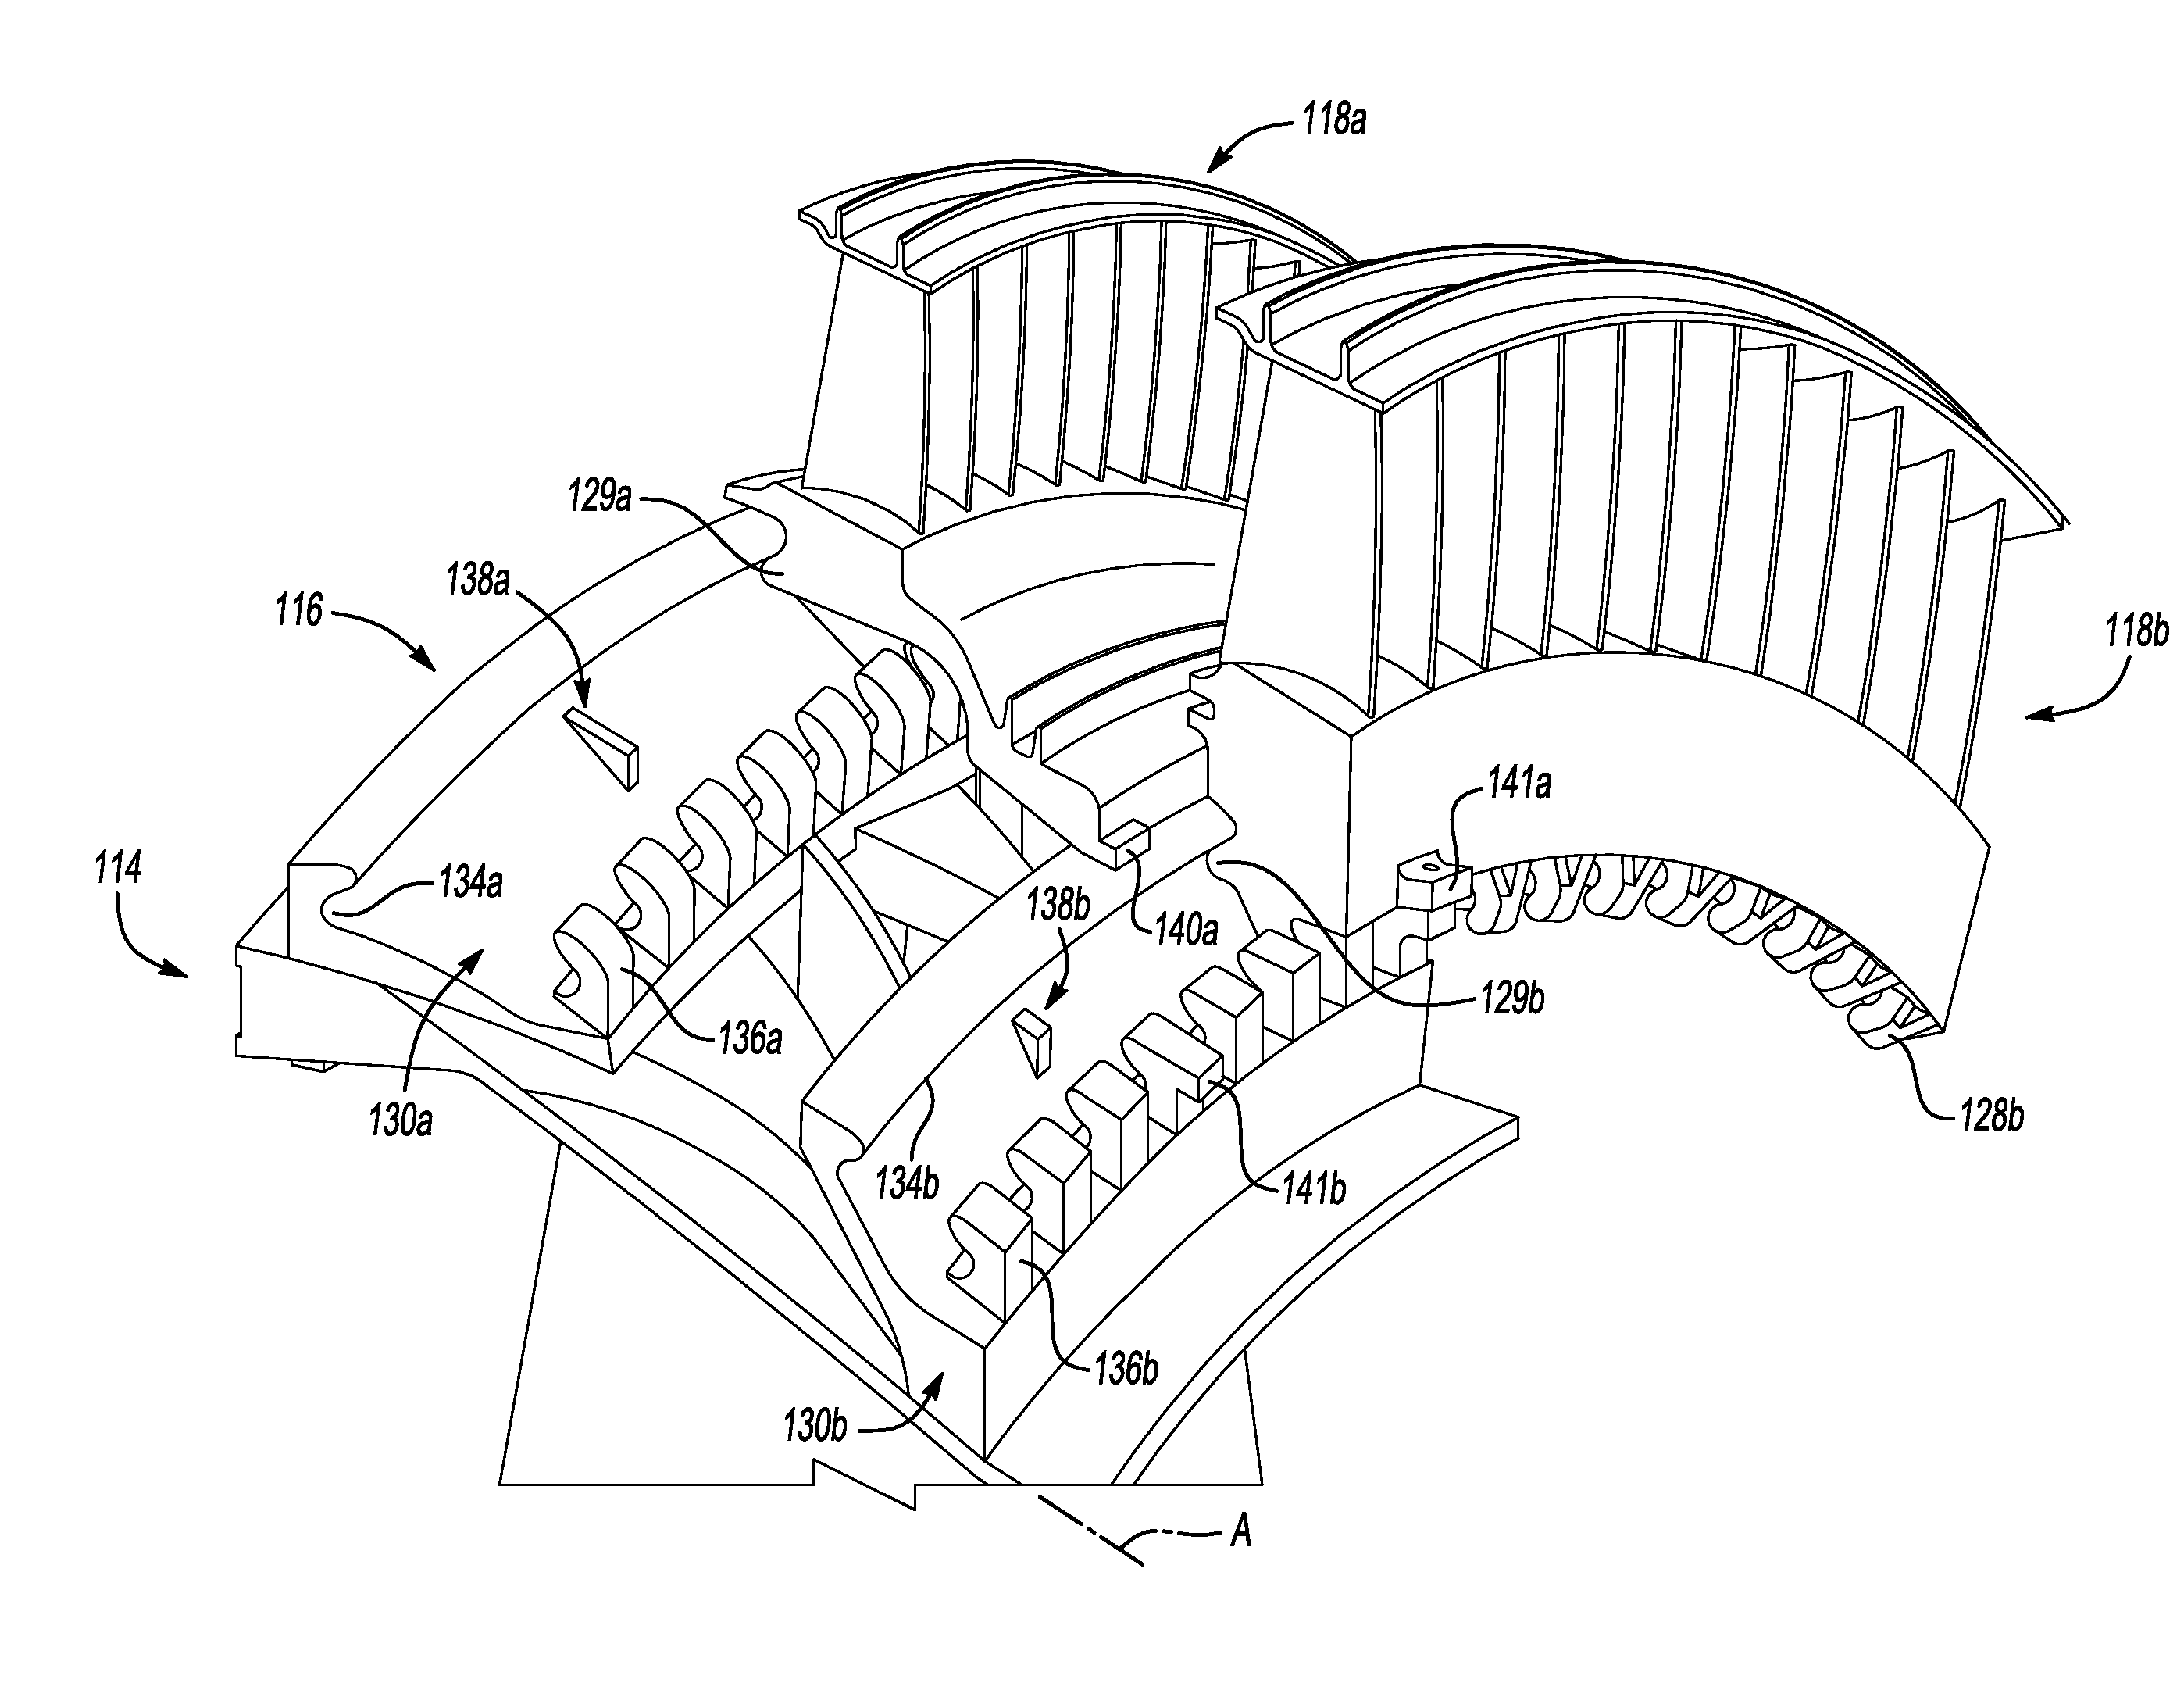 Annular turbine ring rotor